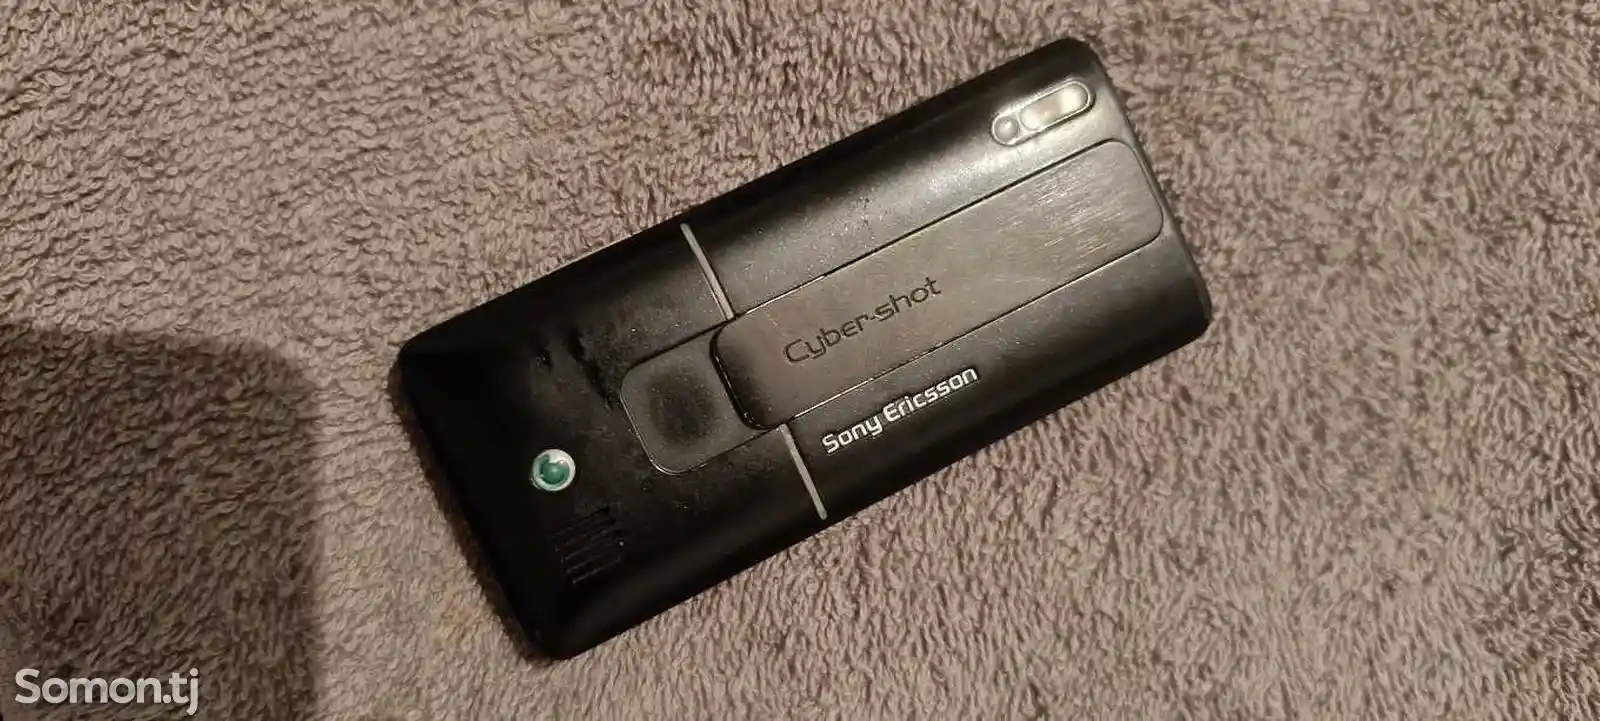 Sony Ericsson K770i-2